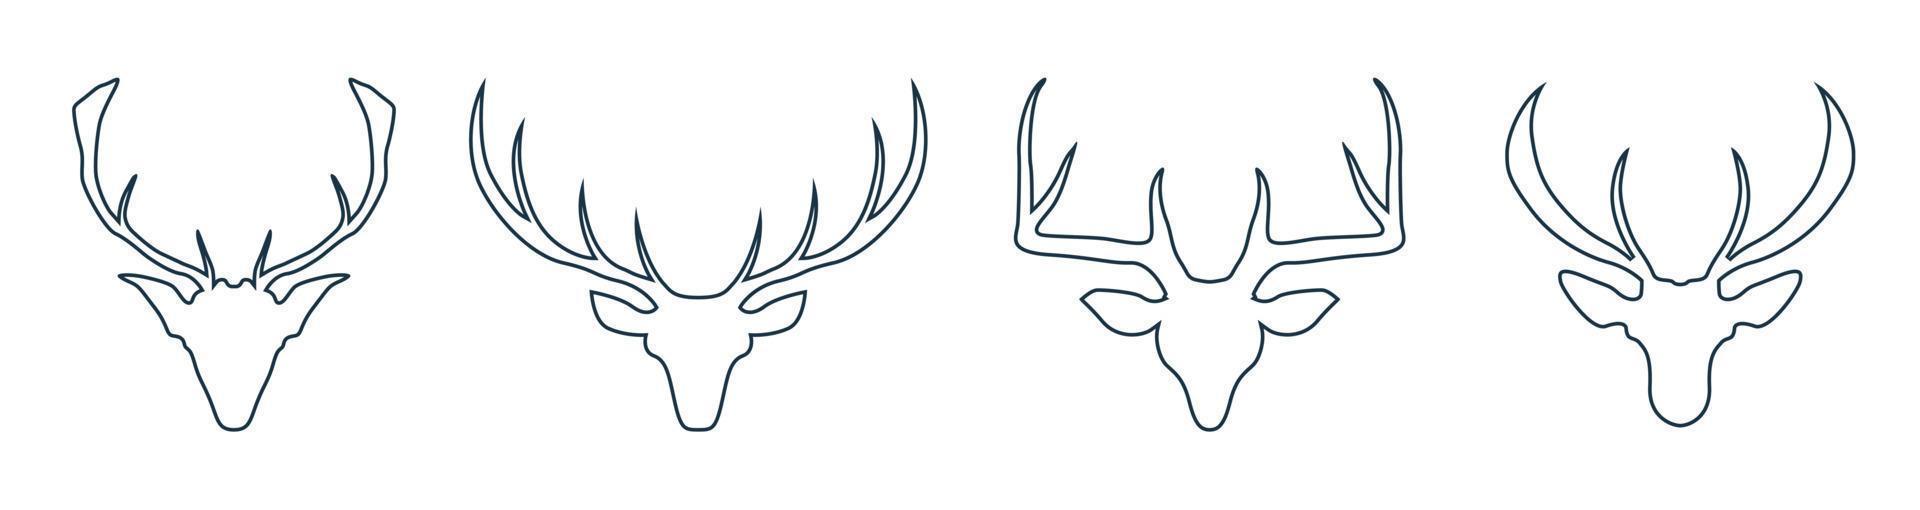 Deer head With Big horn illustration vector line art